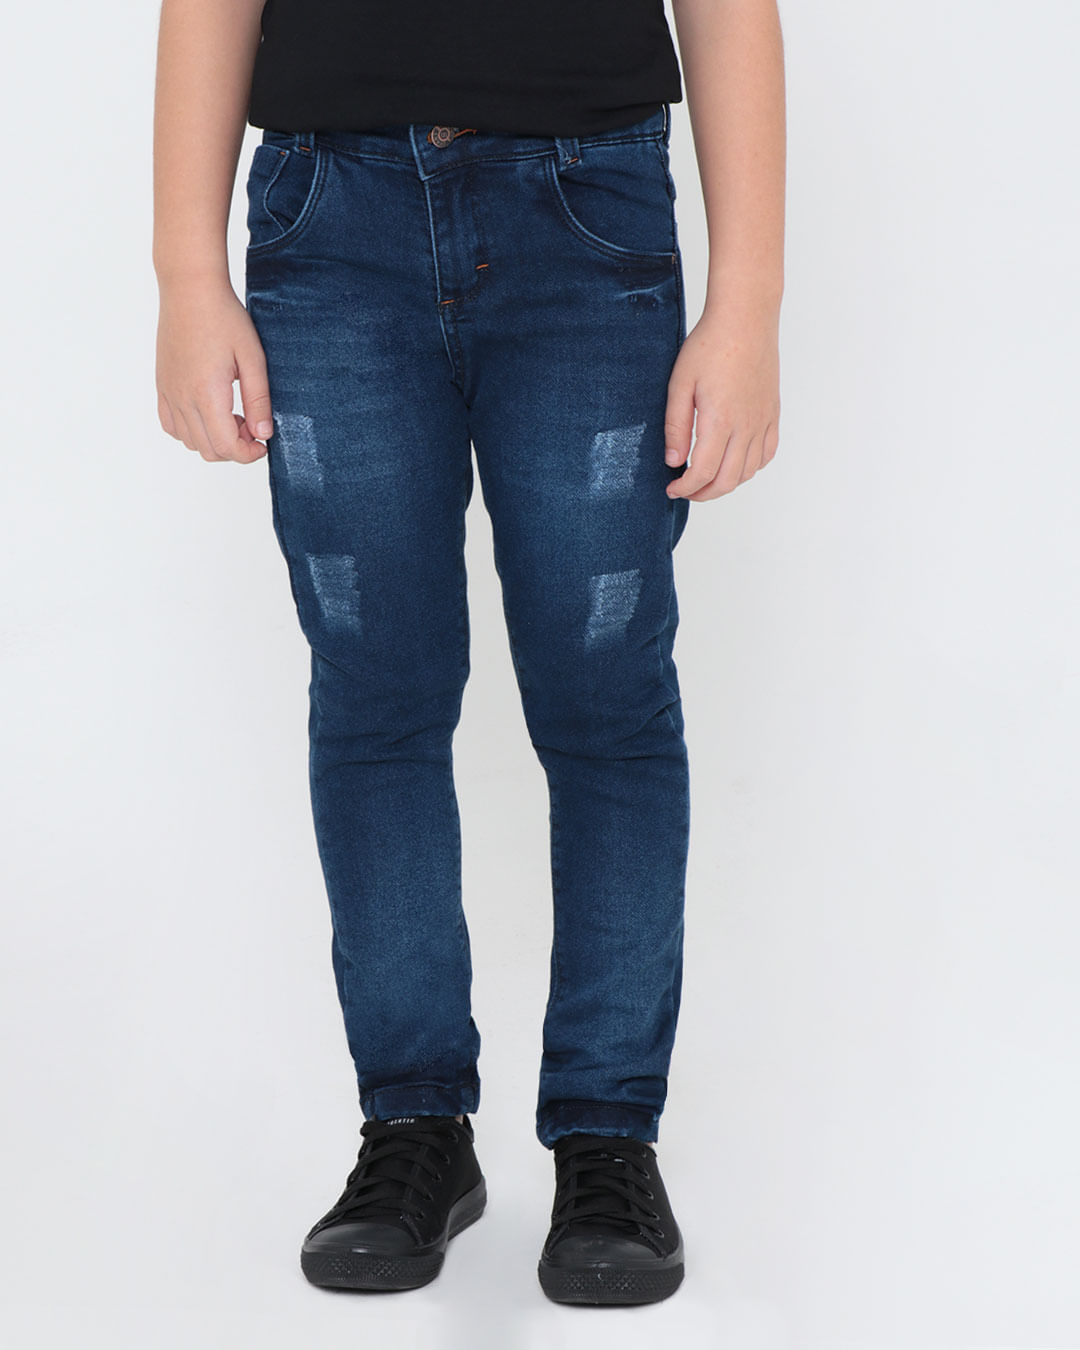 Calca-Jeans-Mol-11187-Masc-48-Le---Blue-Jeans-Escuro